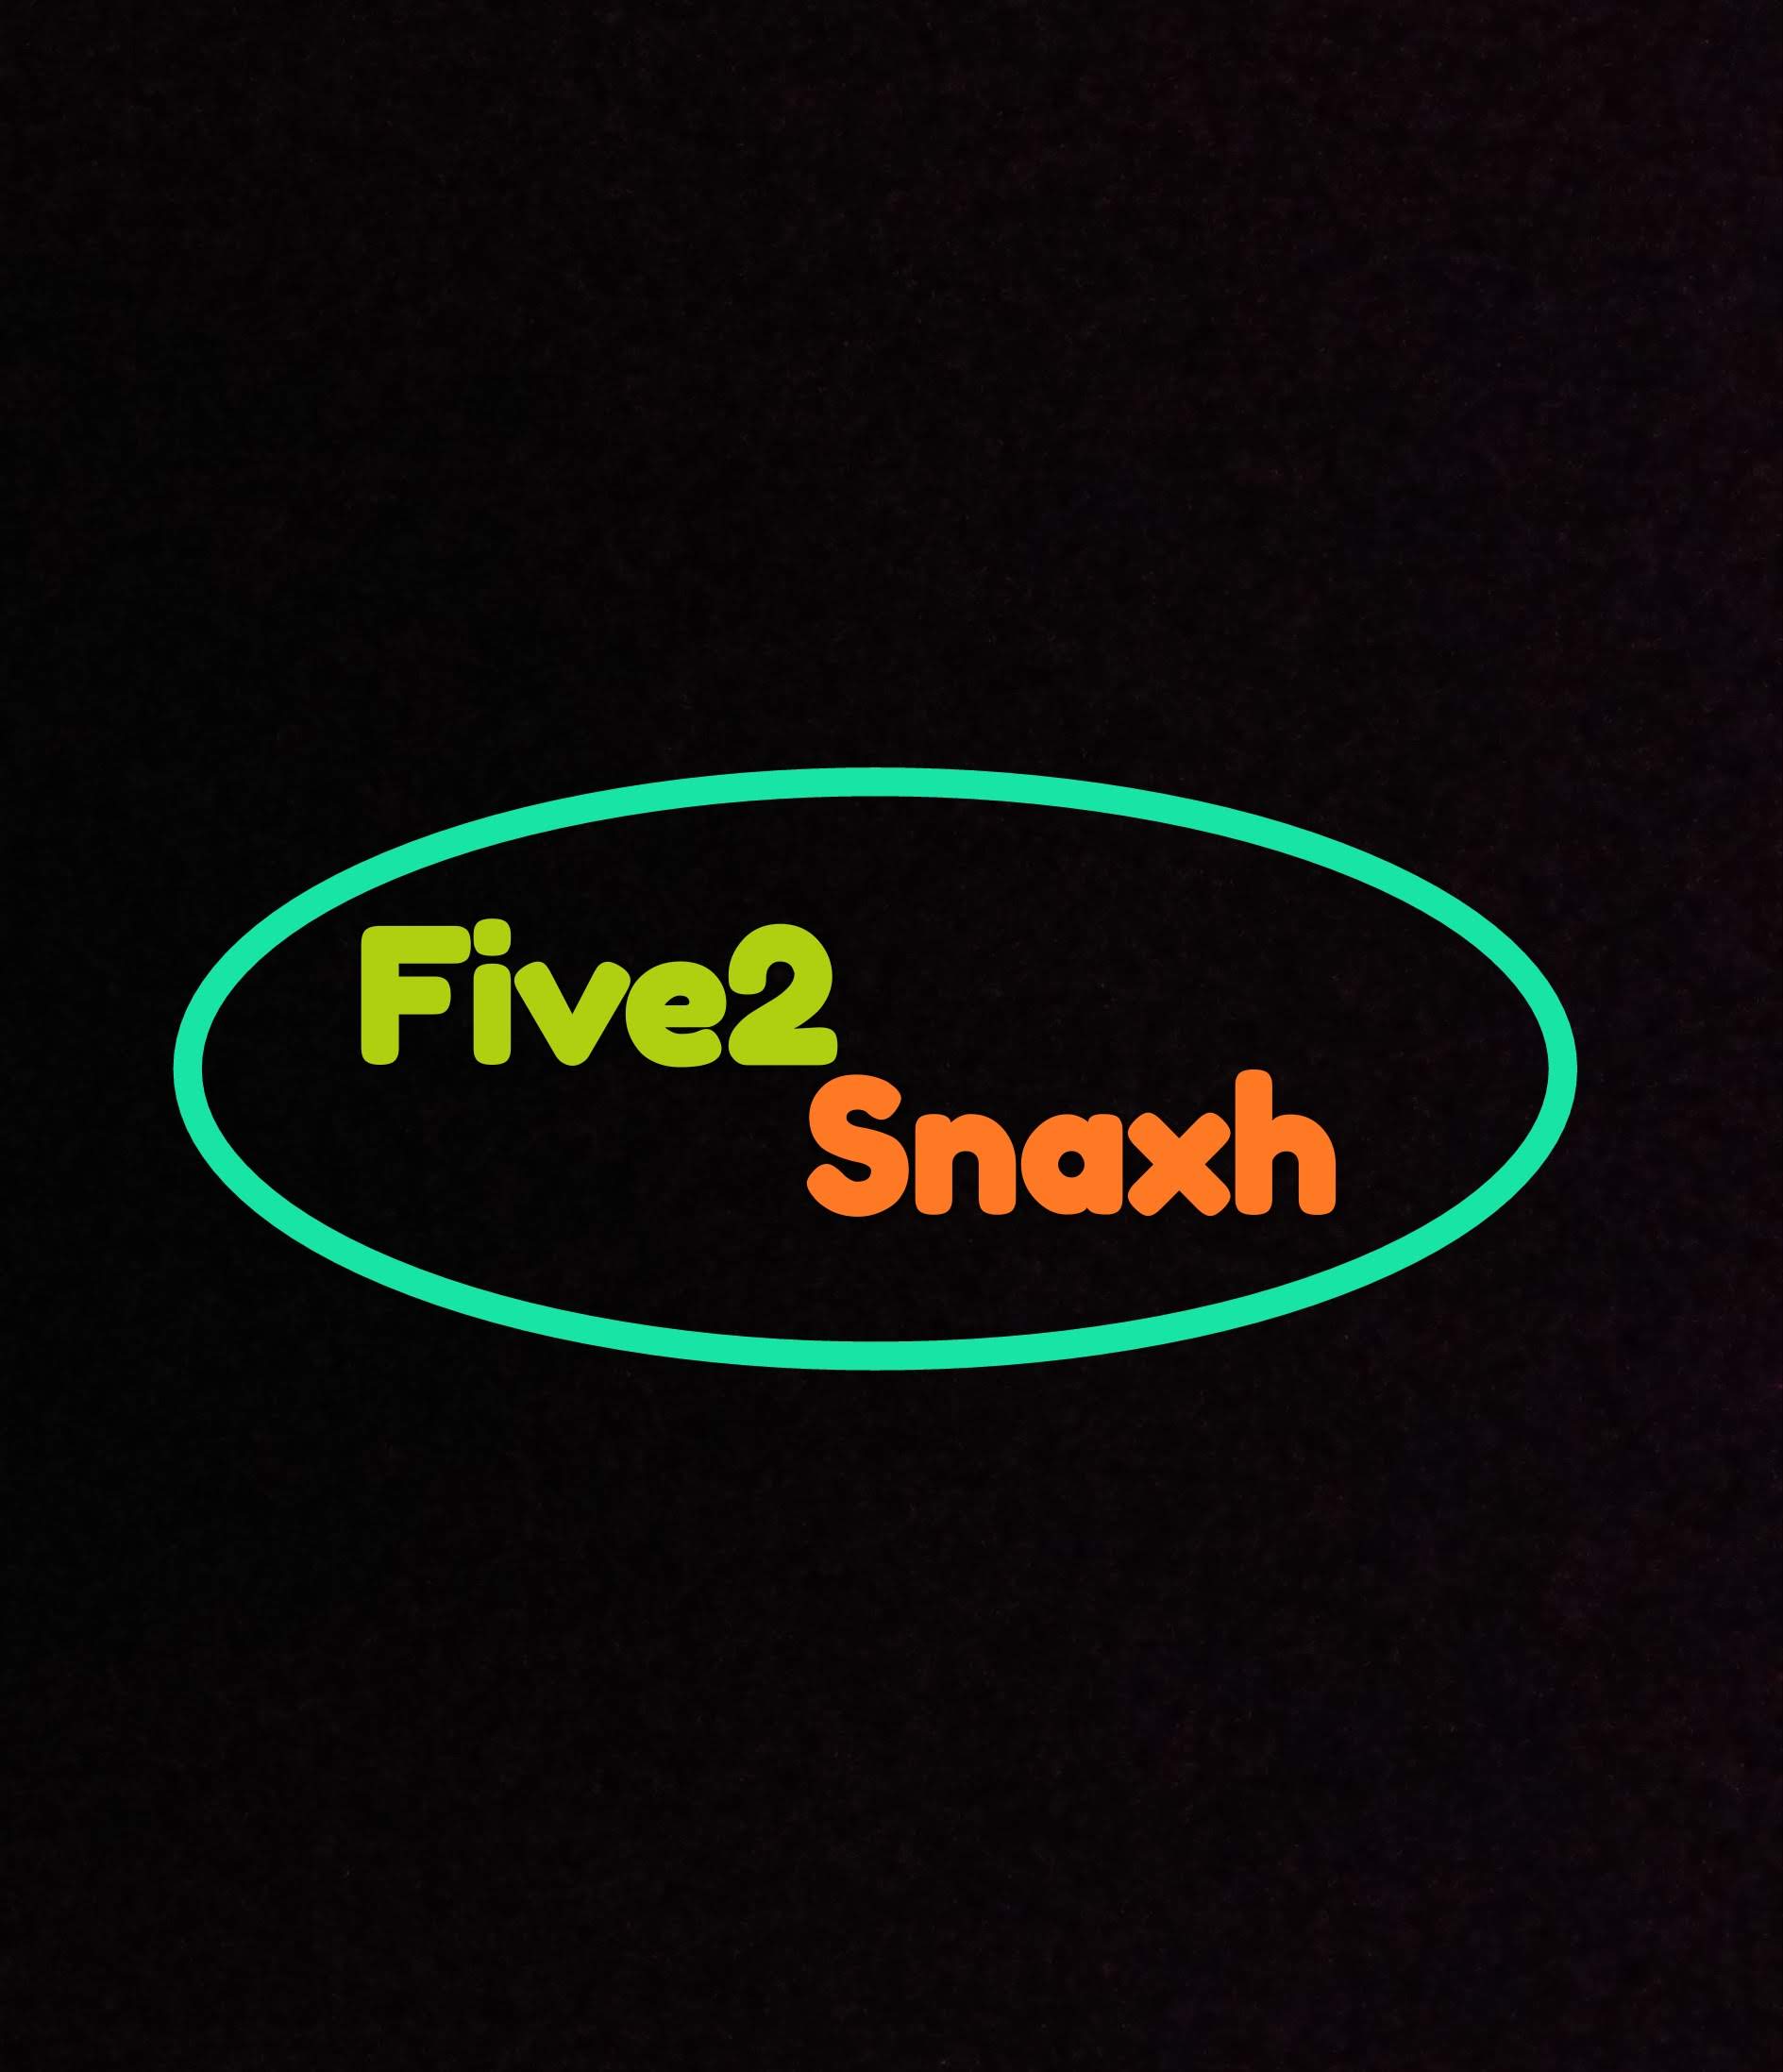 Five2 Snaxh